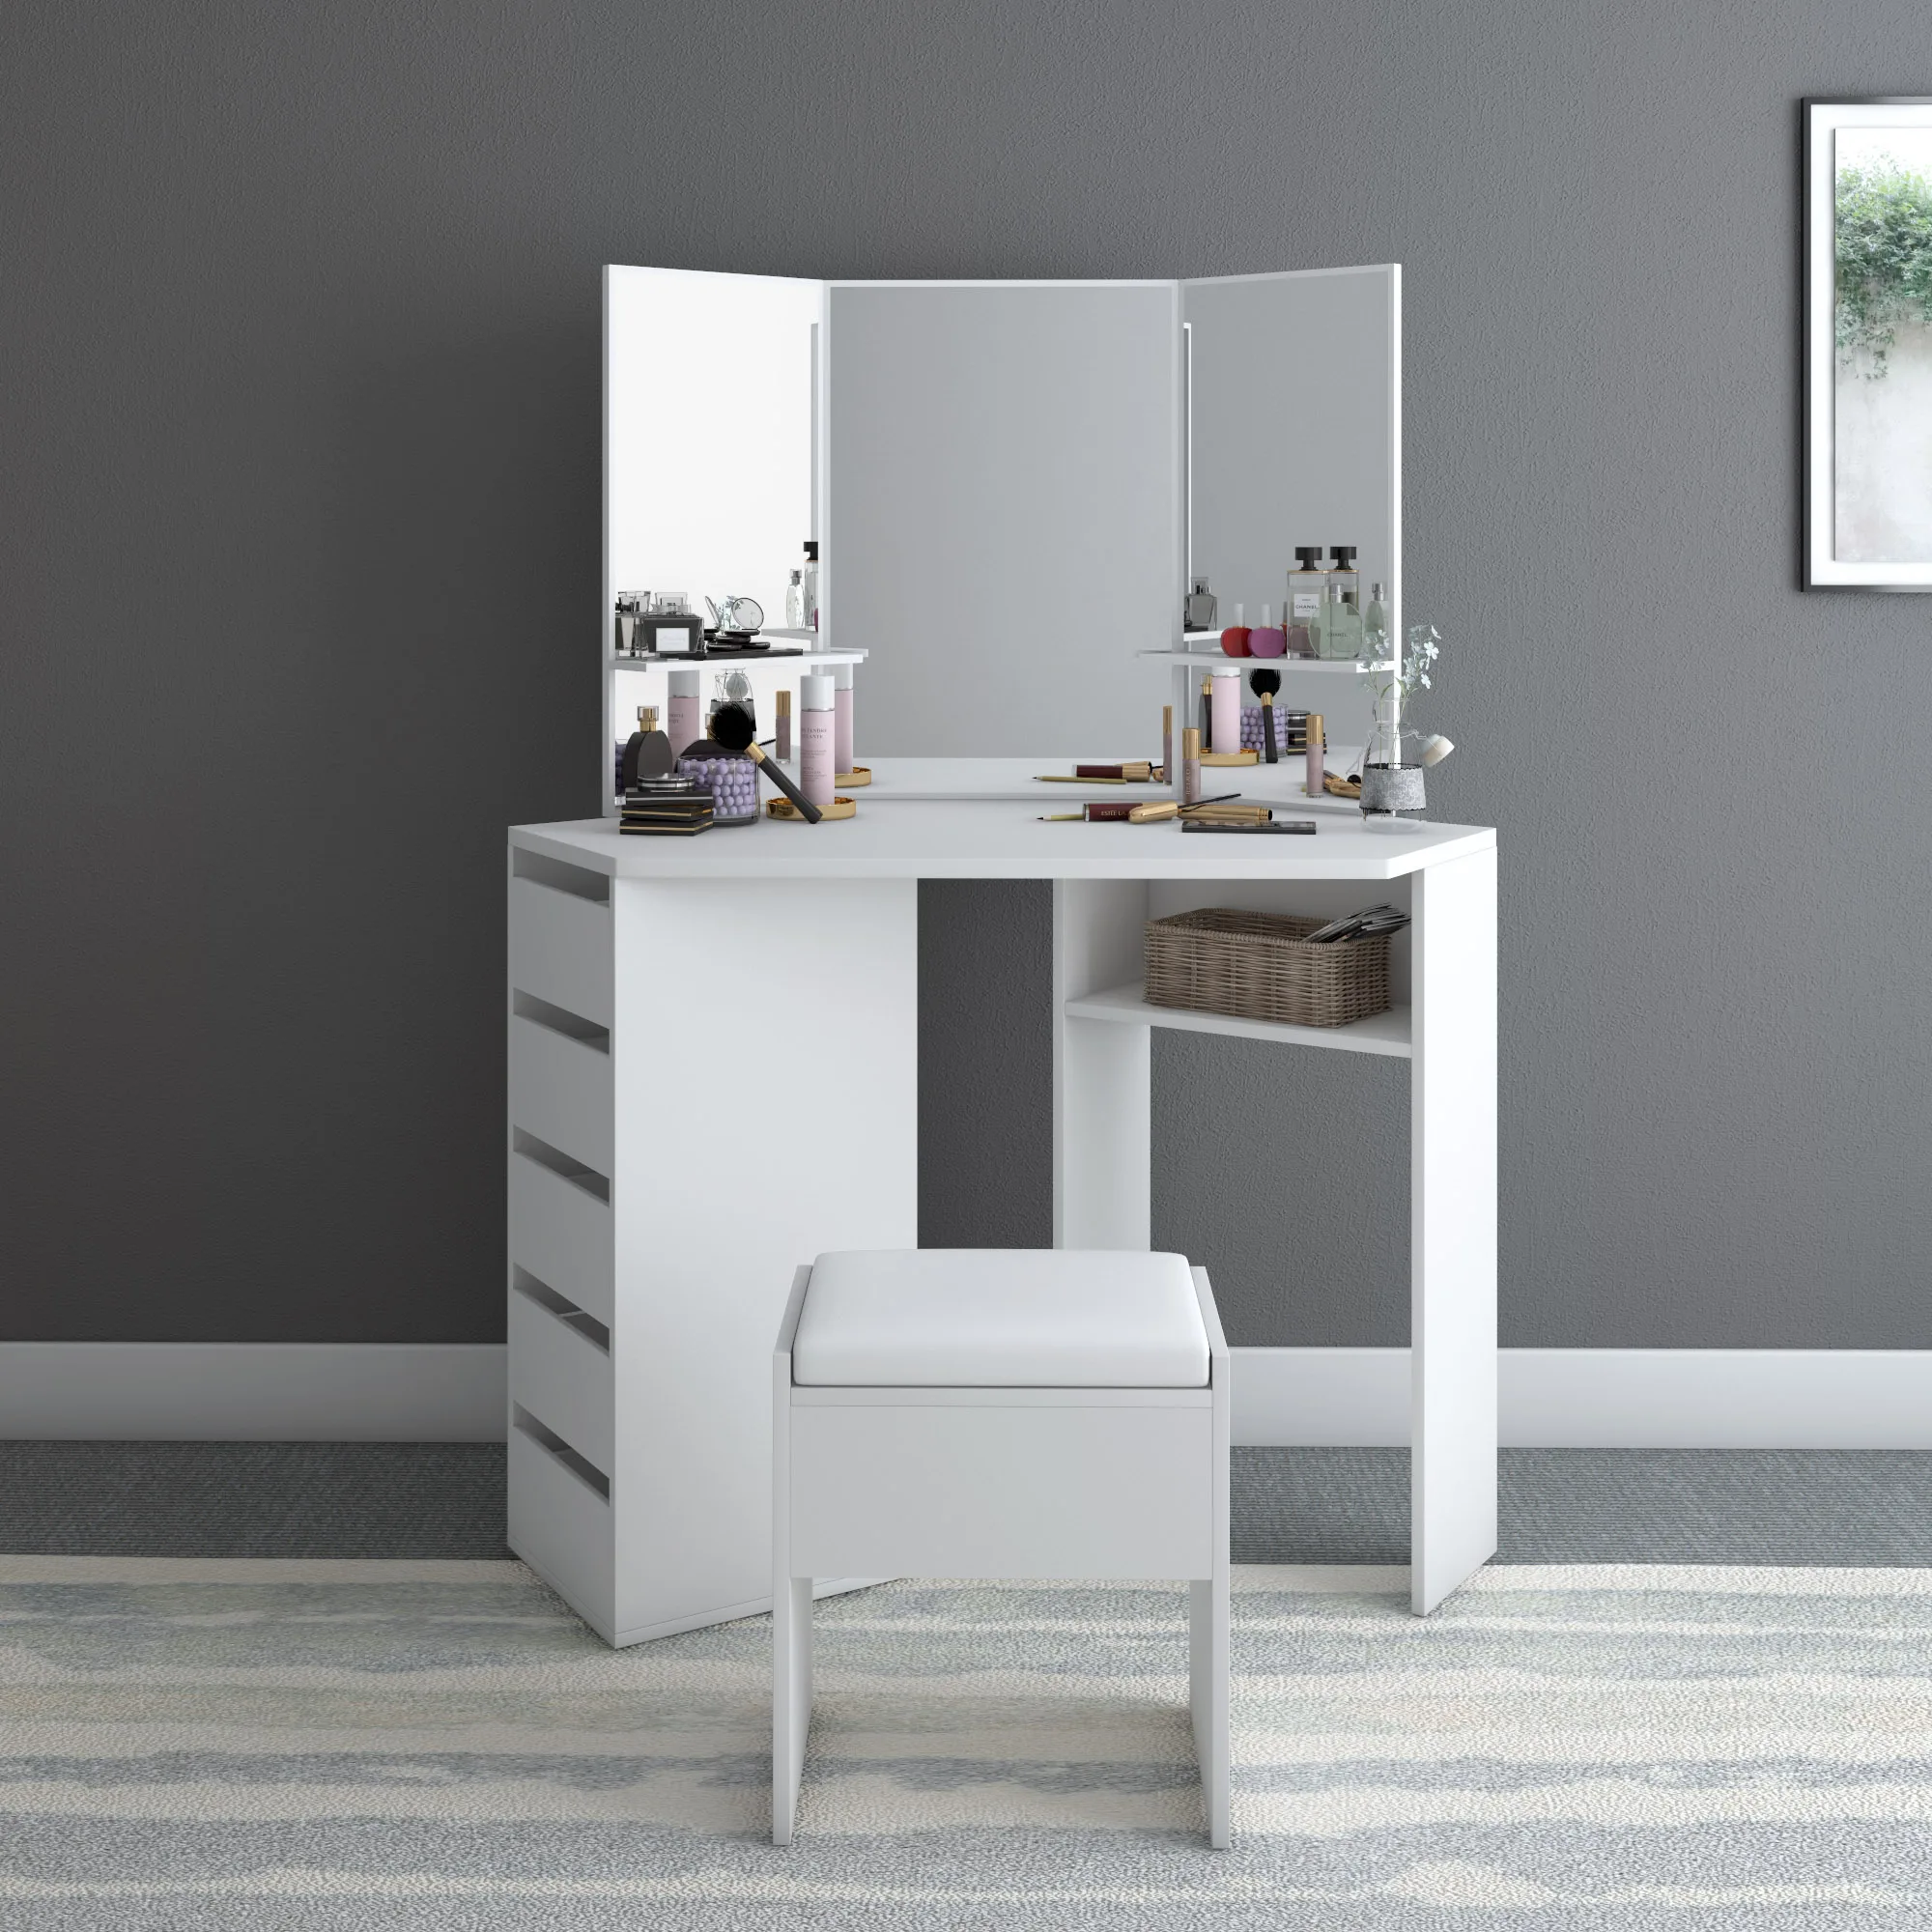 Panana Taburete Color Blanco para Dormitorio Salón Belleza Maquillaje Tocador Moderno de Madera con Espejo 1 Cajón 2 Estantes 